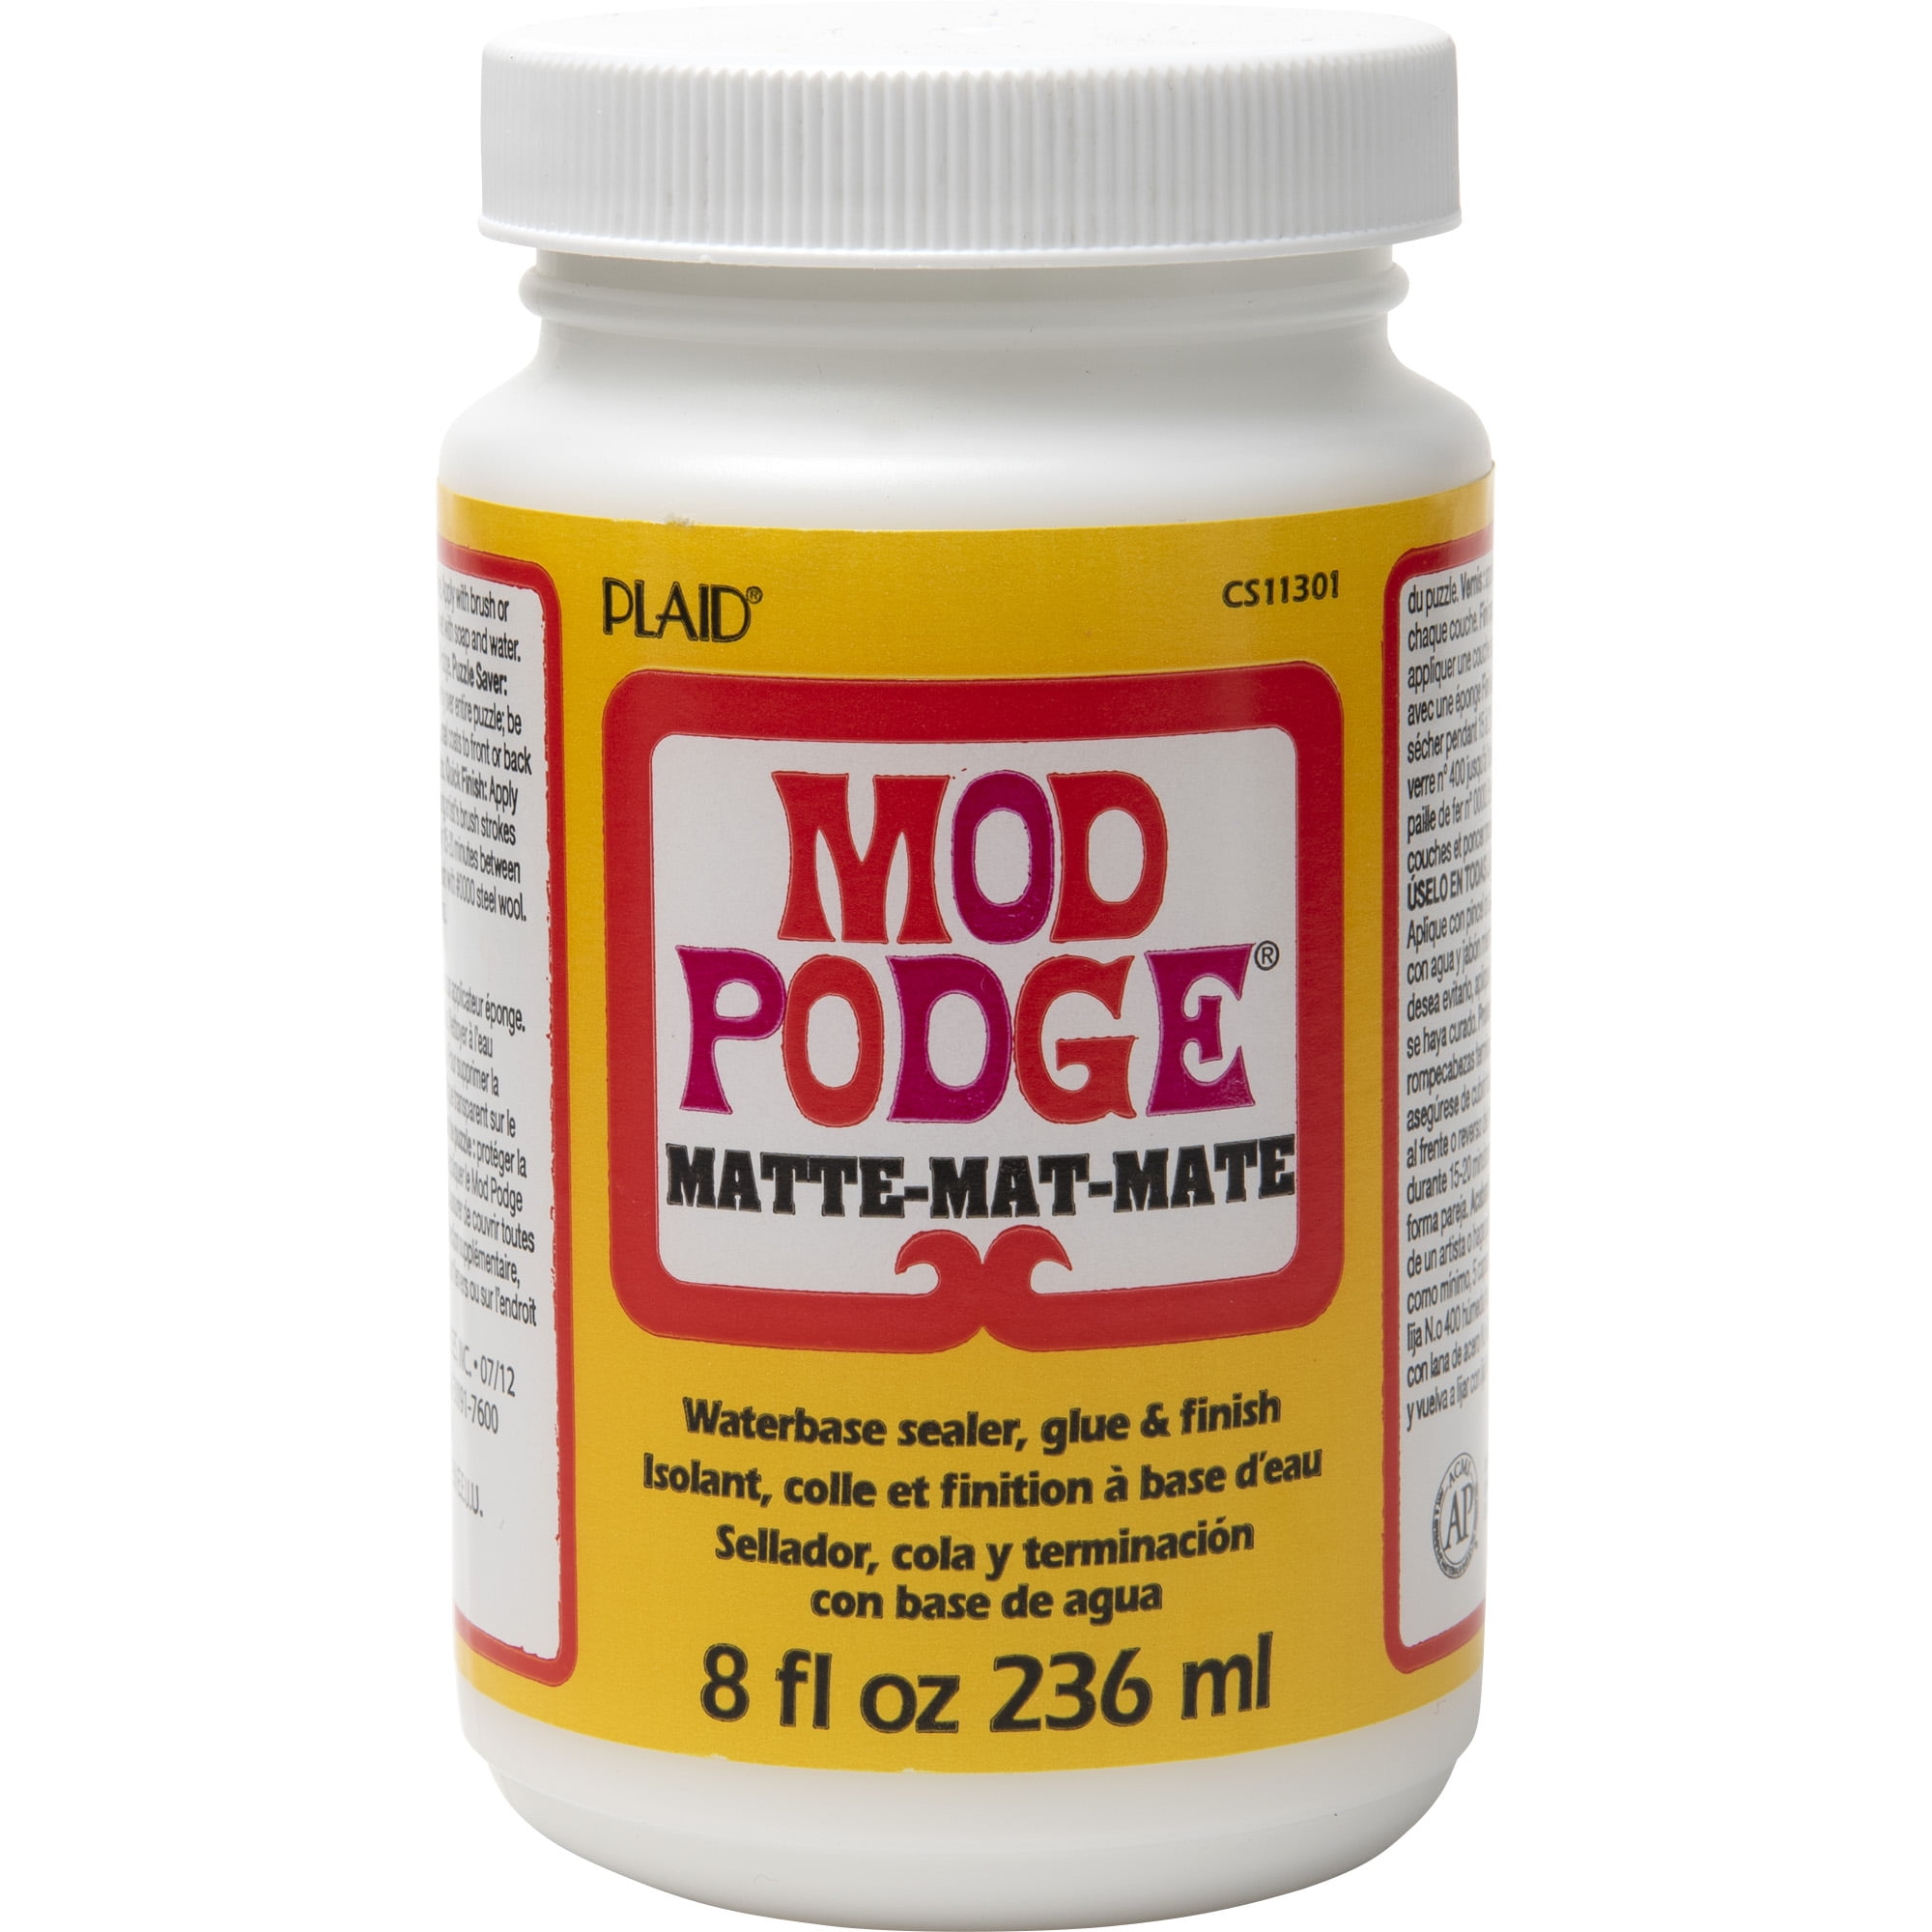 Mod Podge – Platinum Craft Vinyl